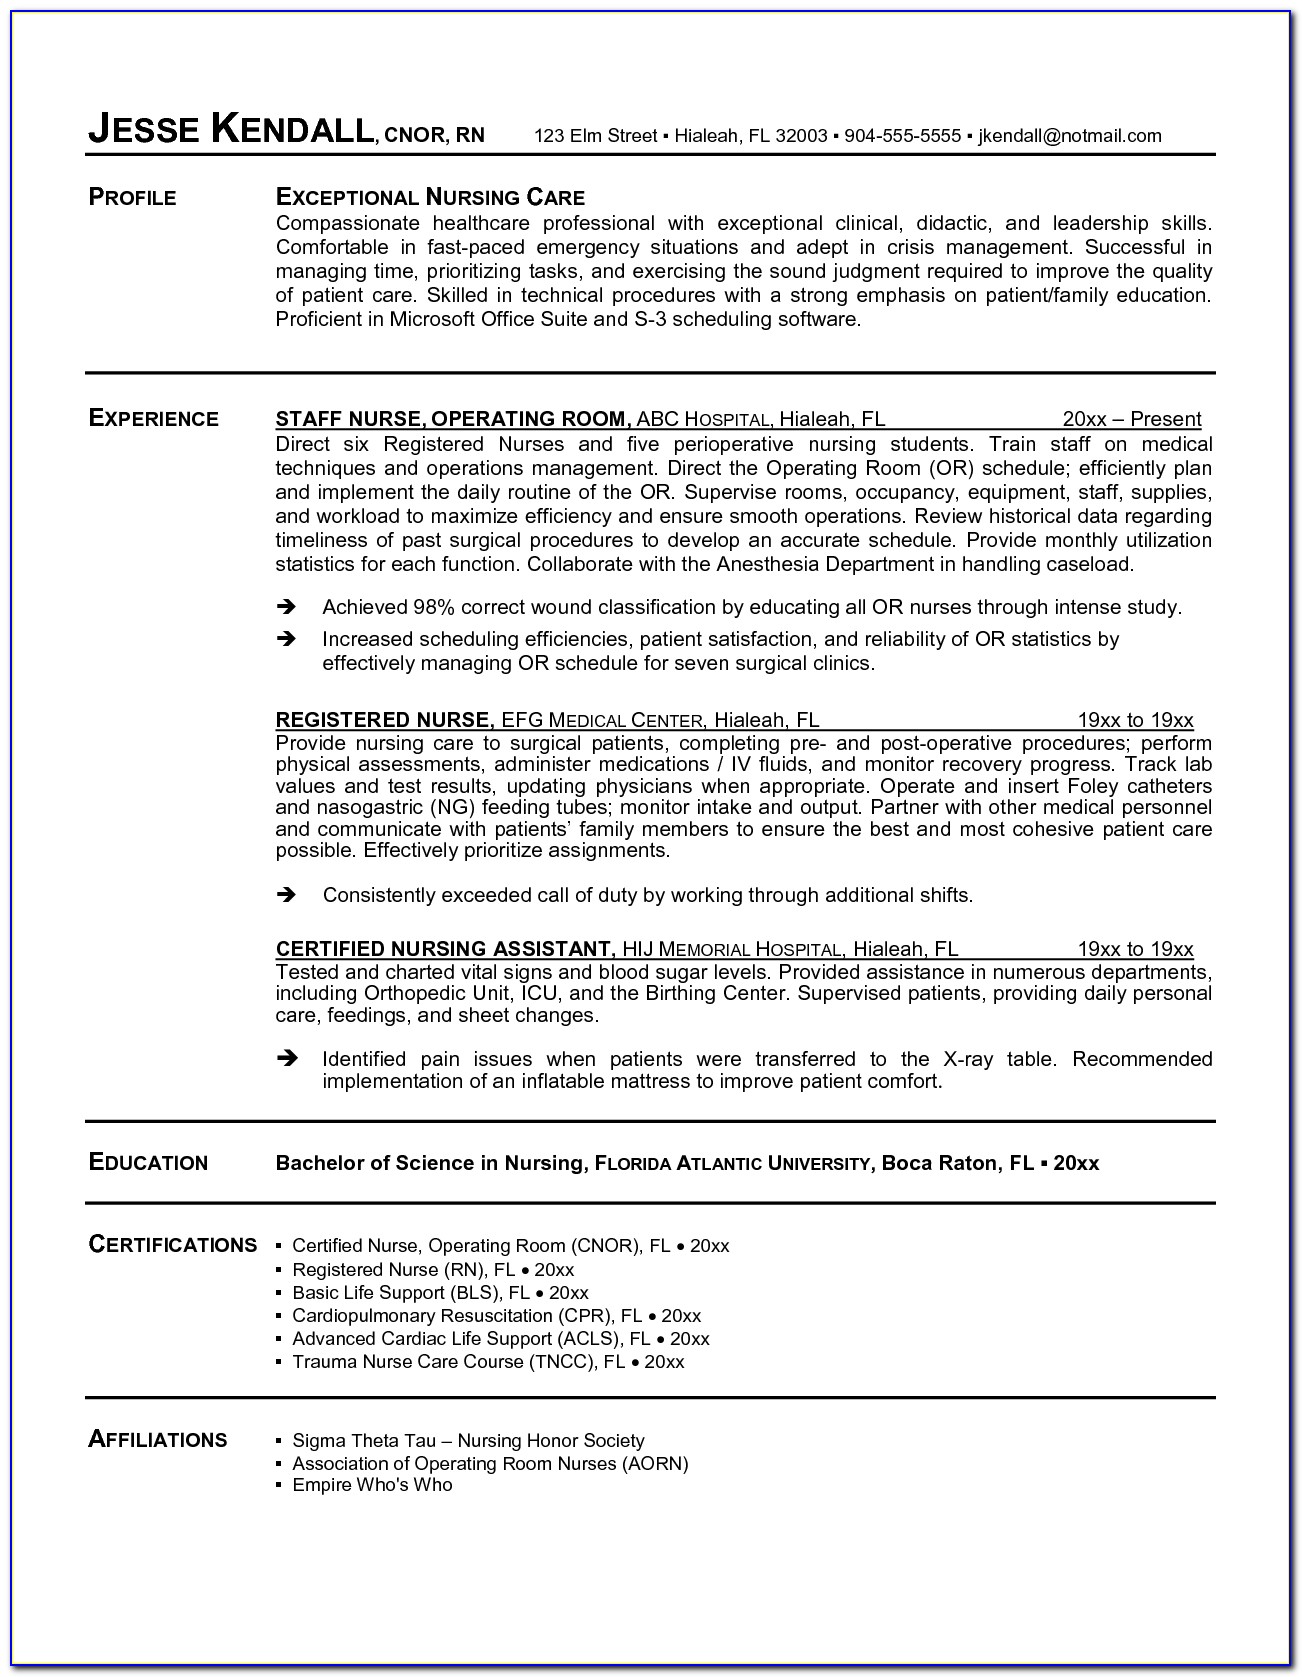 Personal Nurse Sample Resume.html For Sample Resume For Registered Nurse